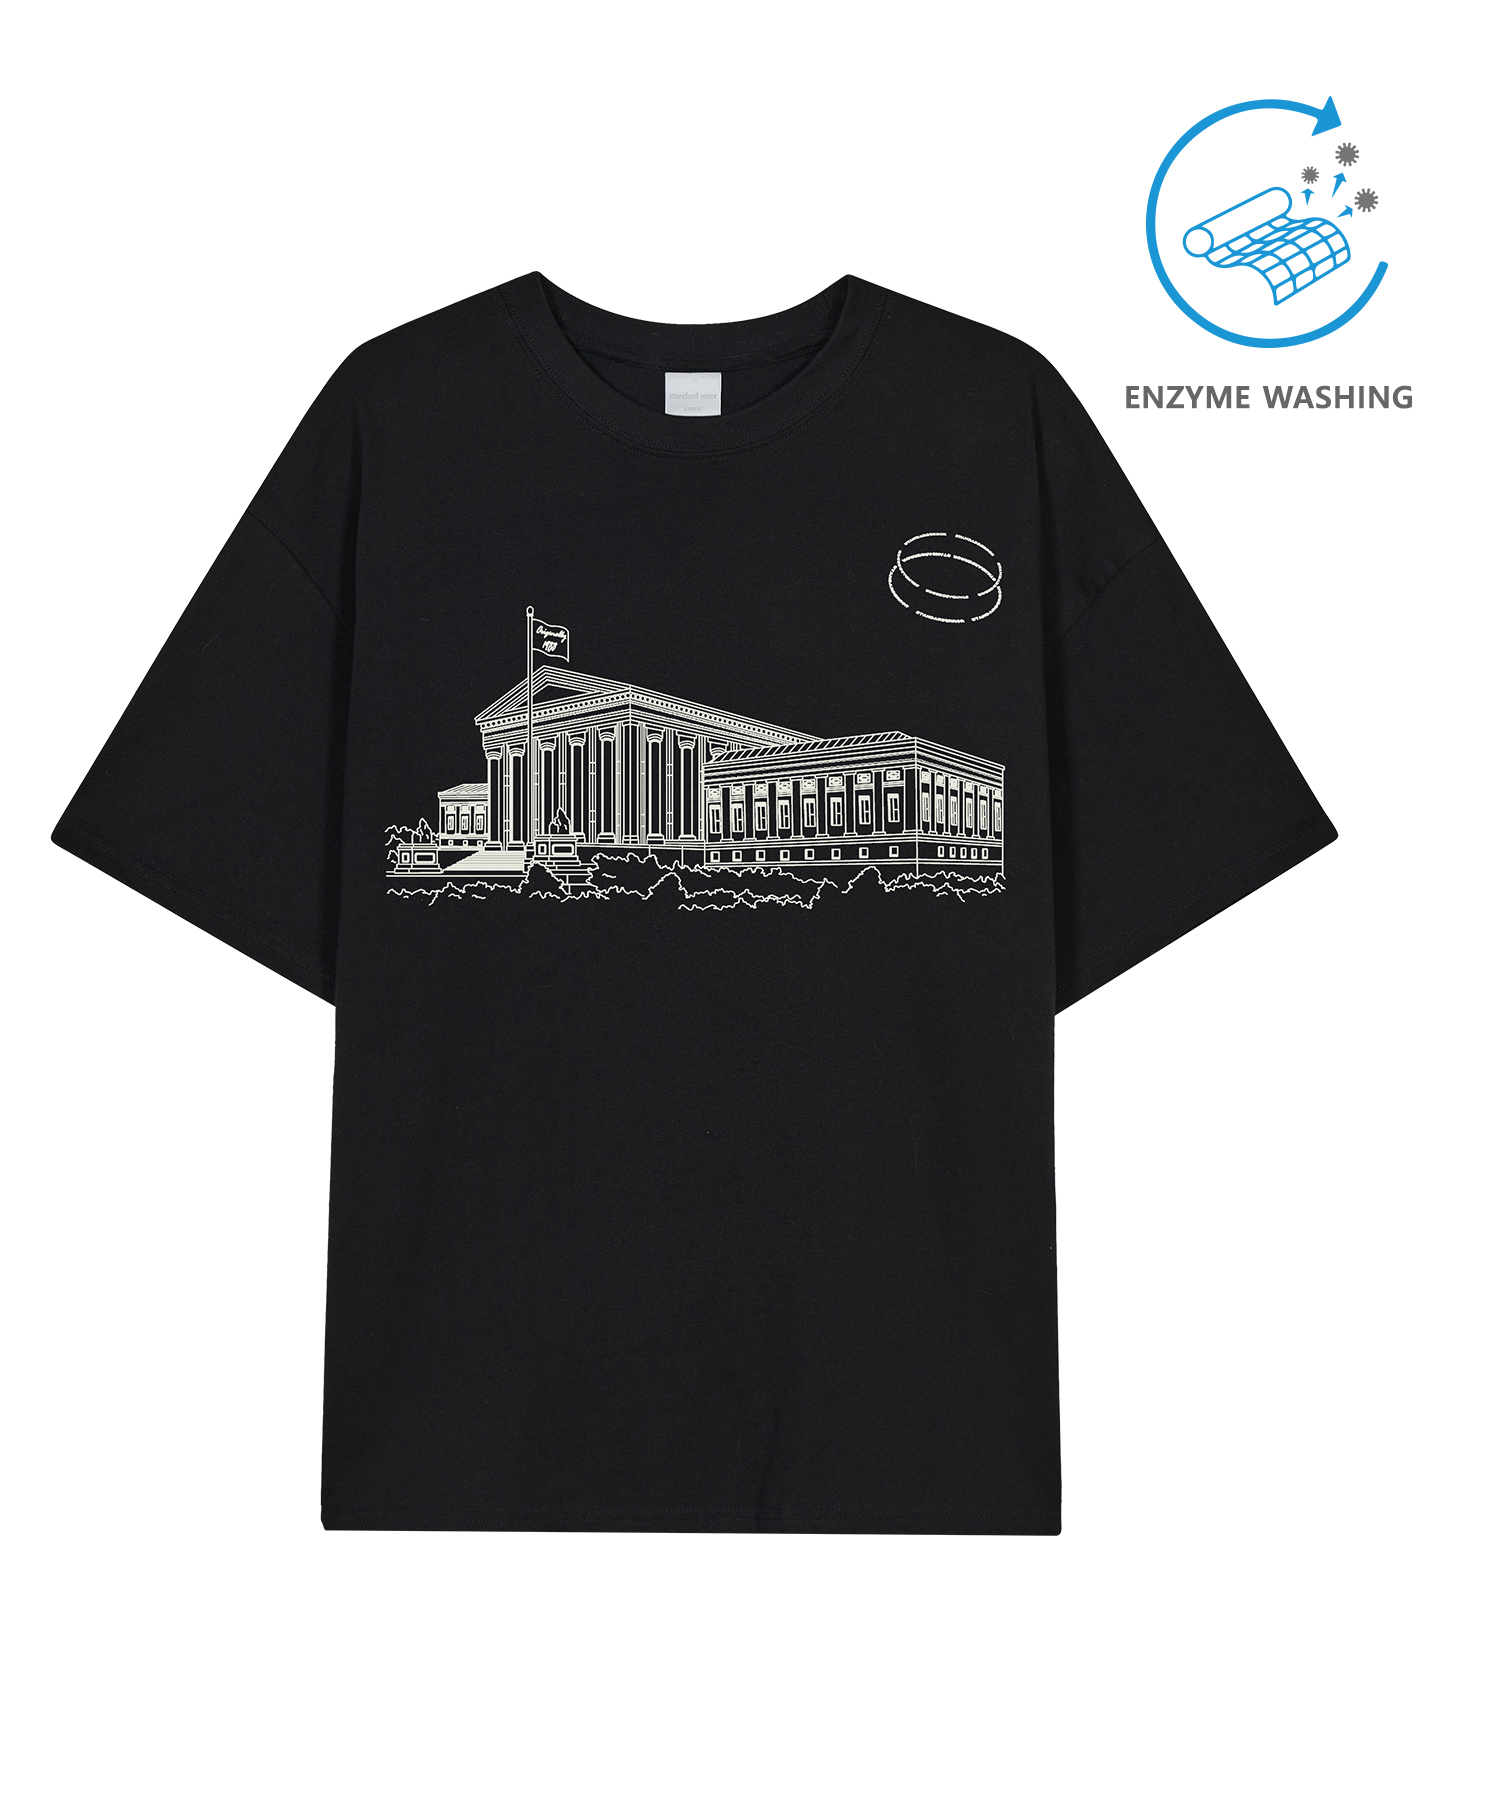 IRT168 [Compact YAN] Enzaim Washing Drawing College Short-sleeved T-shirt  Black